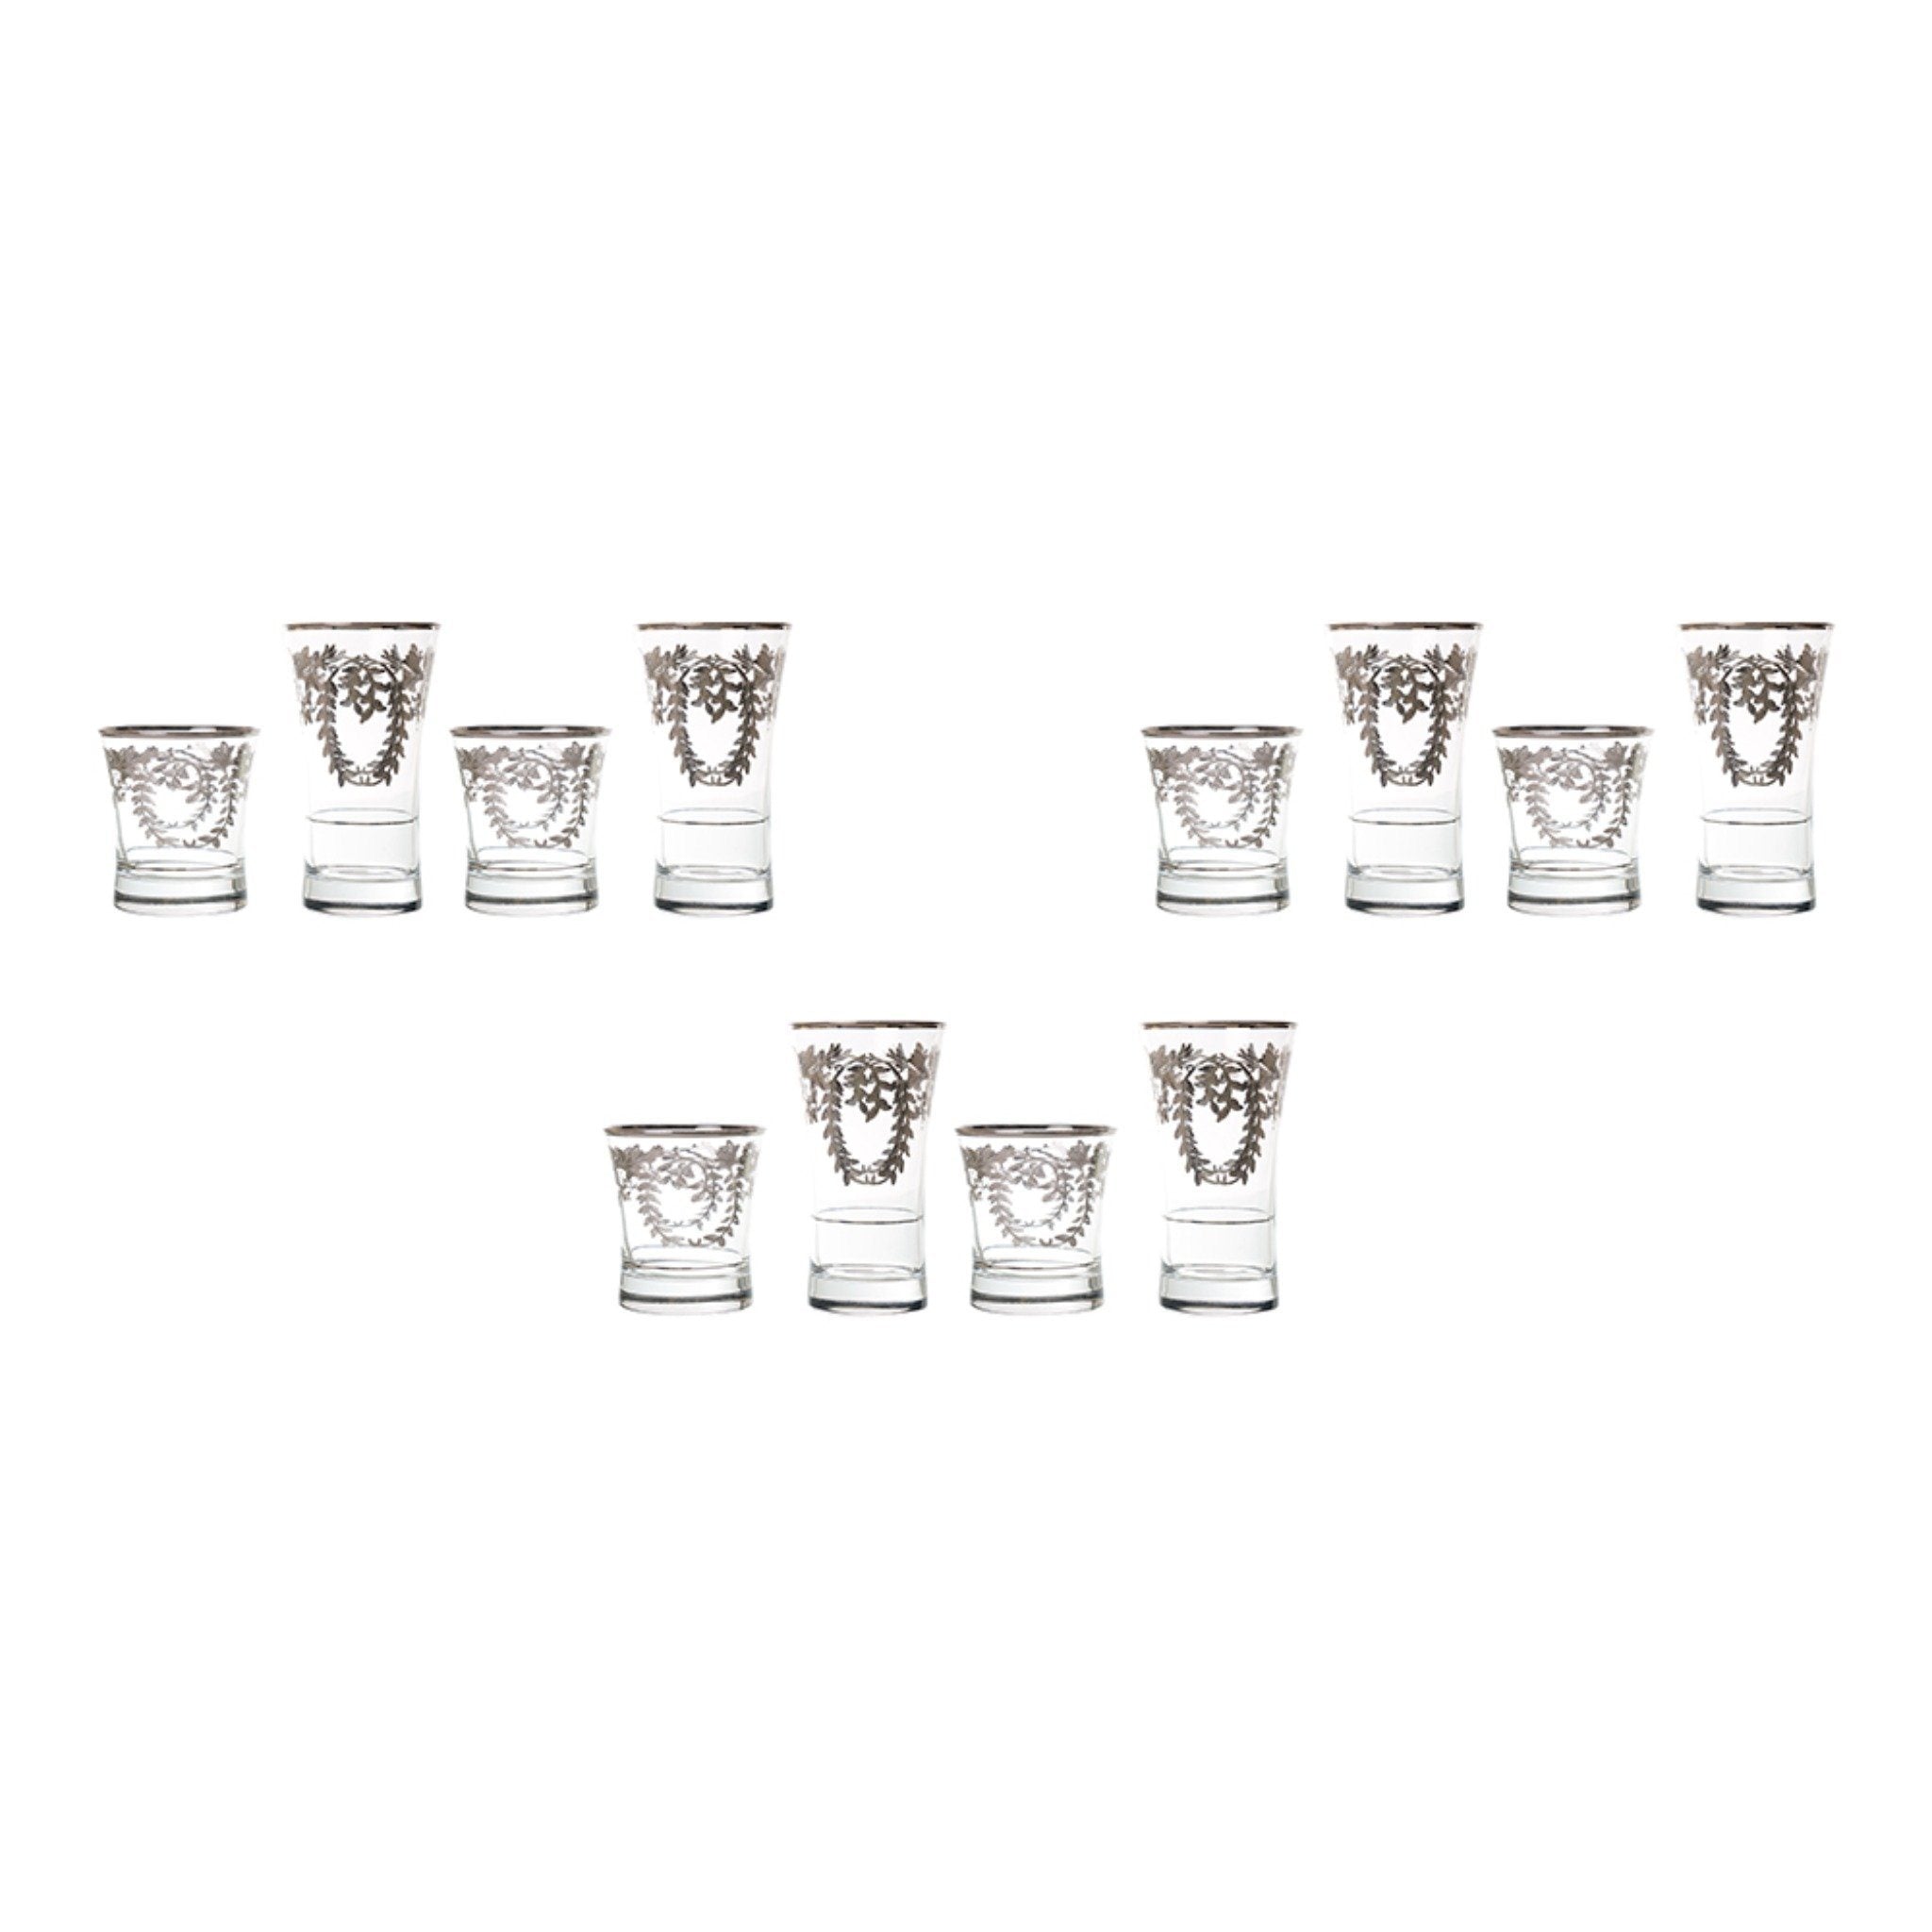 Pasabahce - Highball & Tumbler Glass Set 12 Pieces - Silver - 340ml & 250ml - 39000664